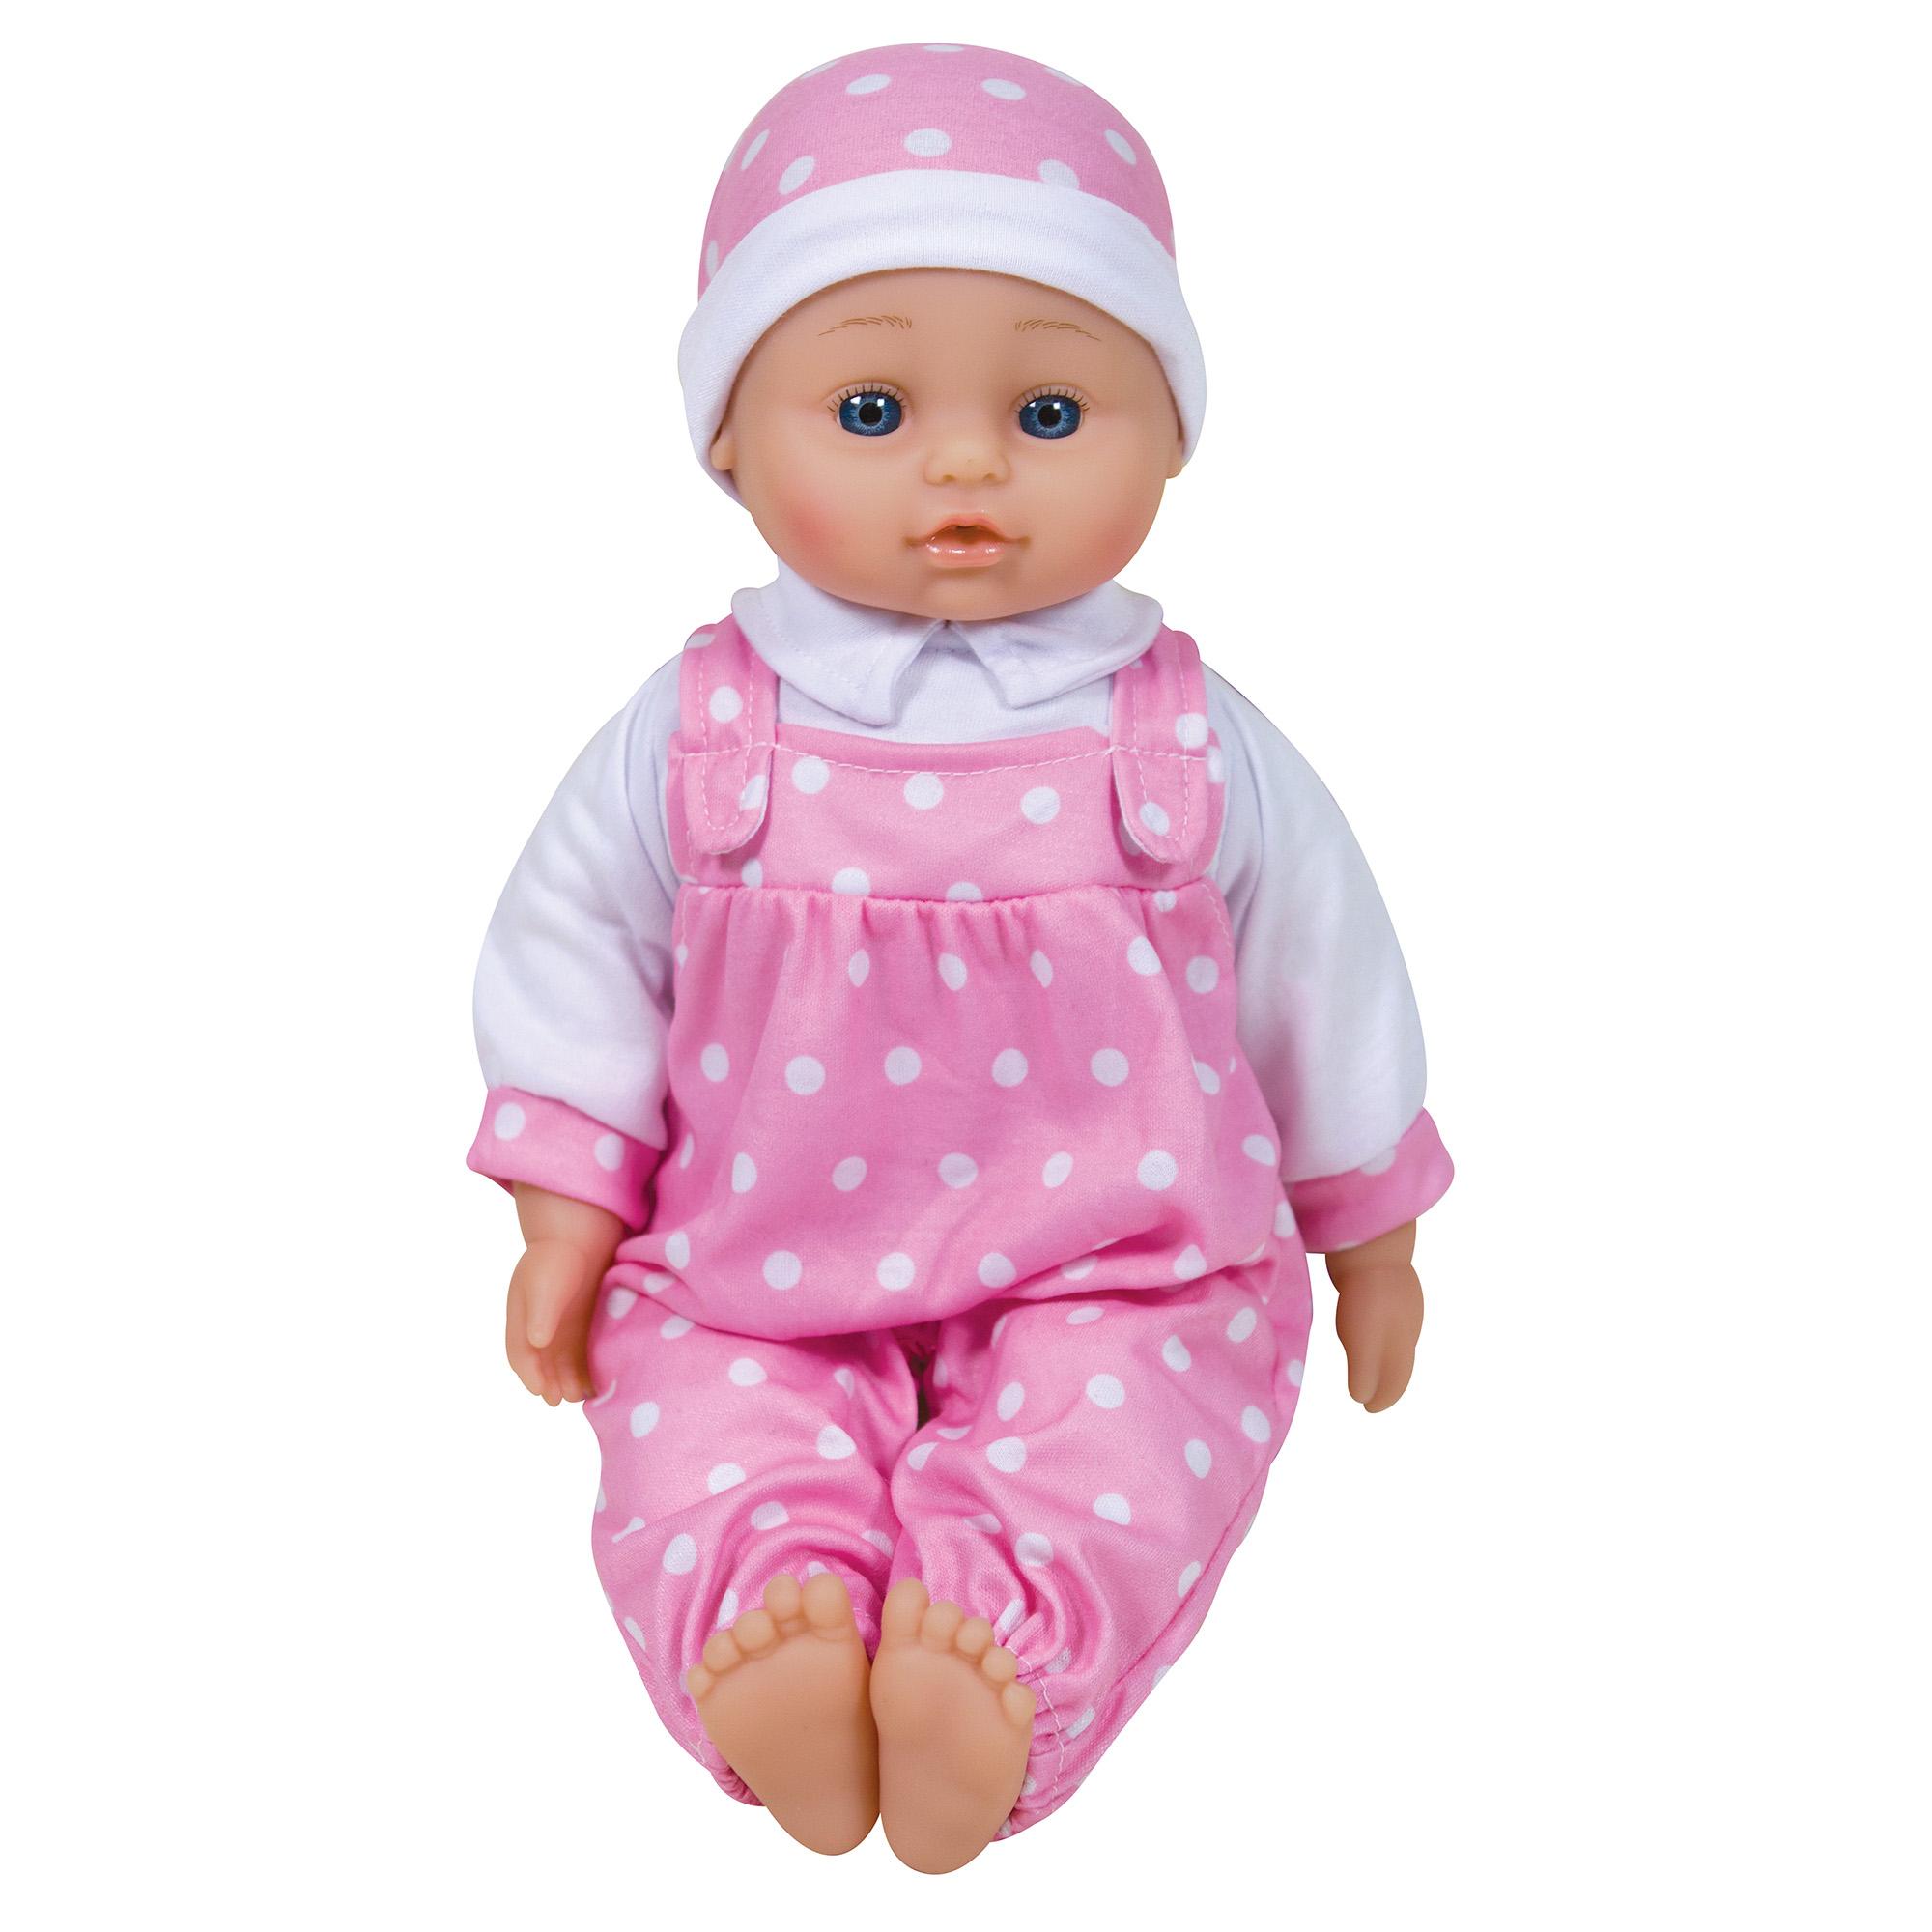 Baby Ellie & Friends 40cm Talking Baby Doll - £18.75 - Hamleys for ...